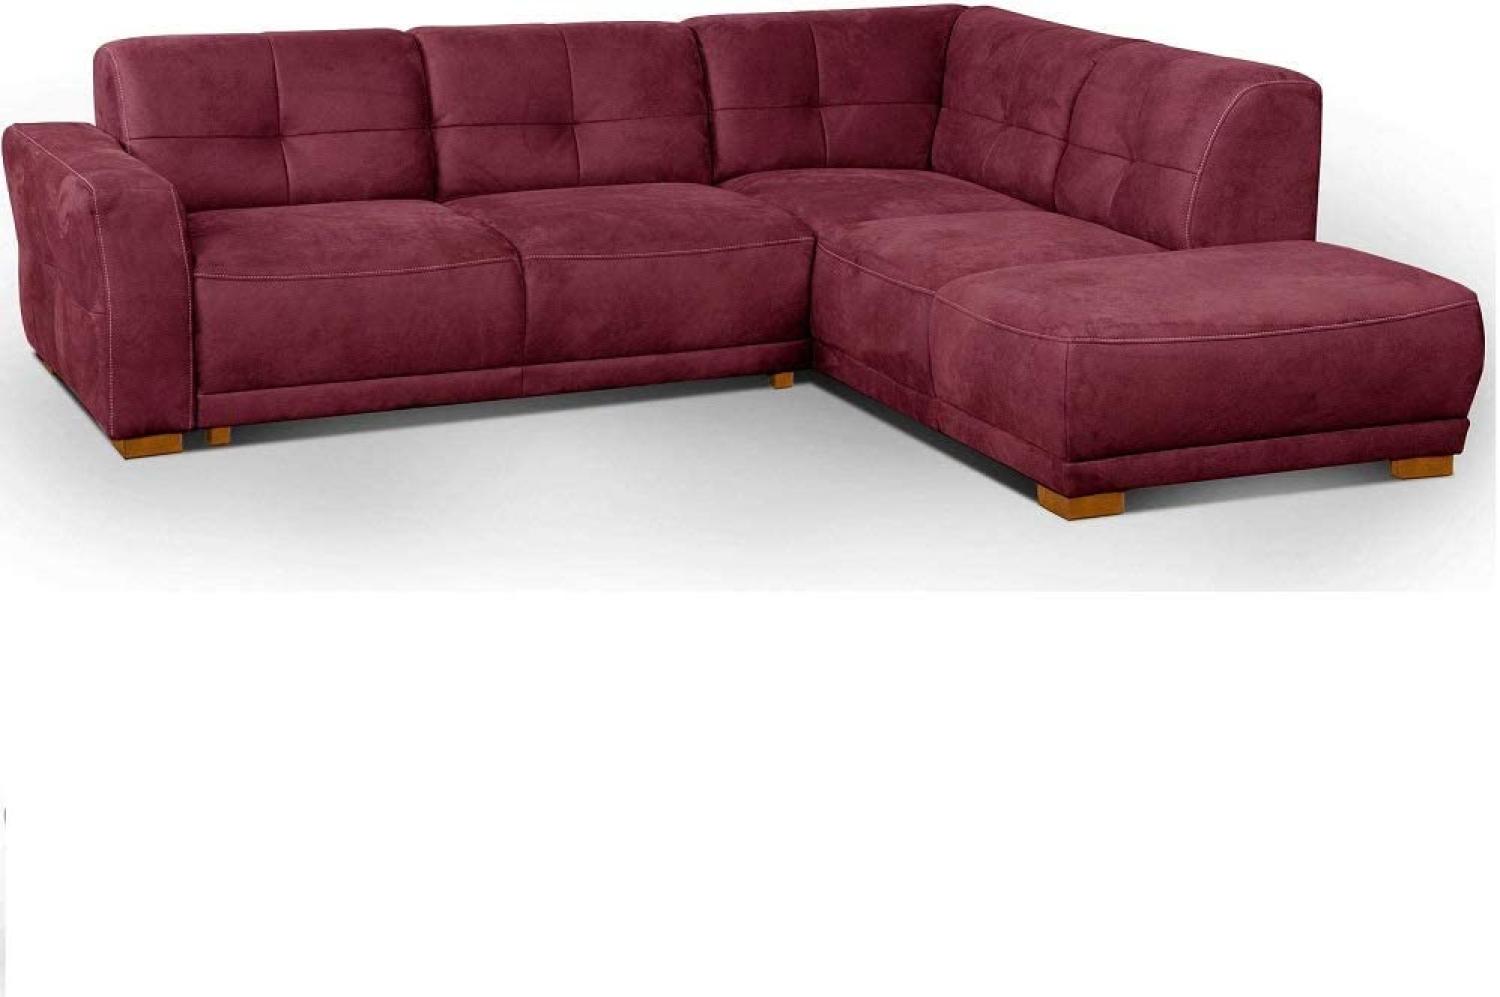 Cavadore Ecksofa Modeo, mit Federkern, Sofa in L-Form im modernen Landhausstil, Holzfüße, 261 x 77 x 214, Lederoptik, rot Bild 1